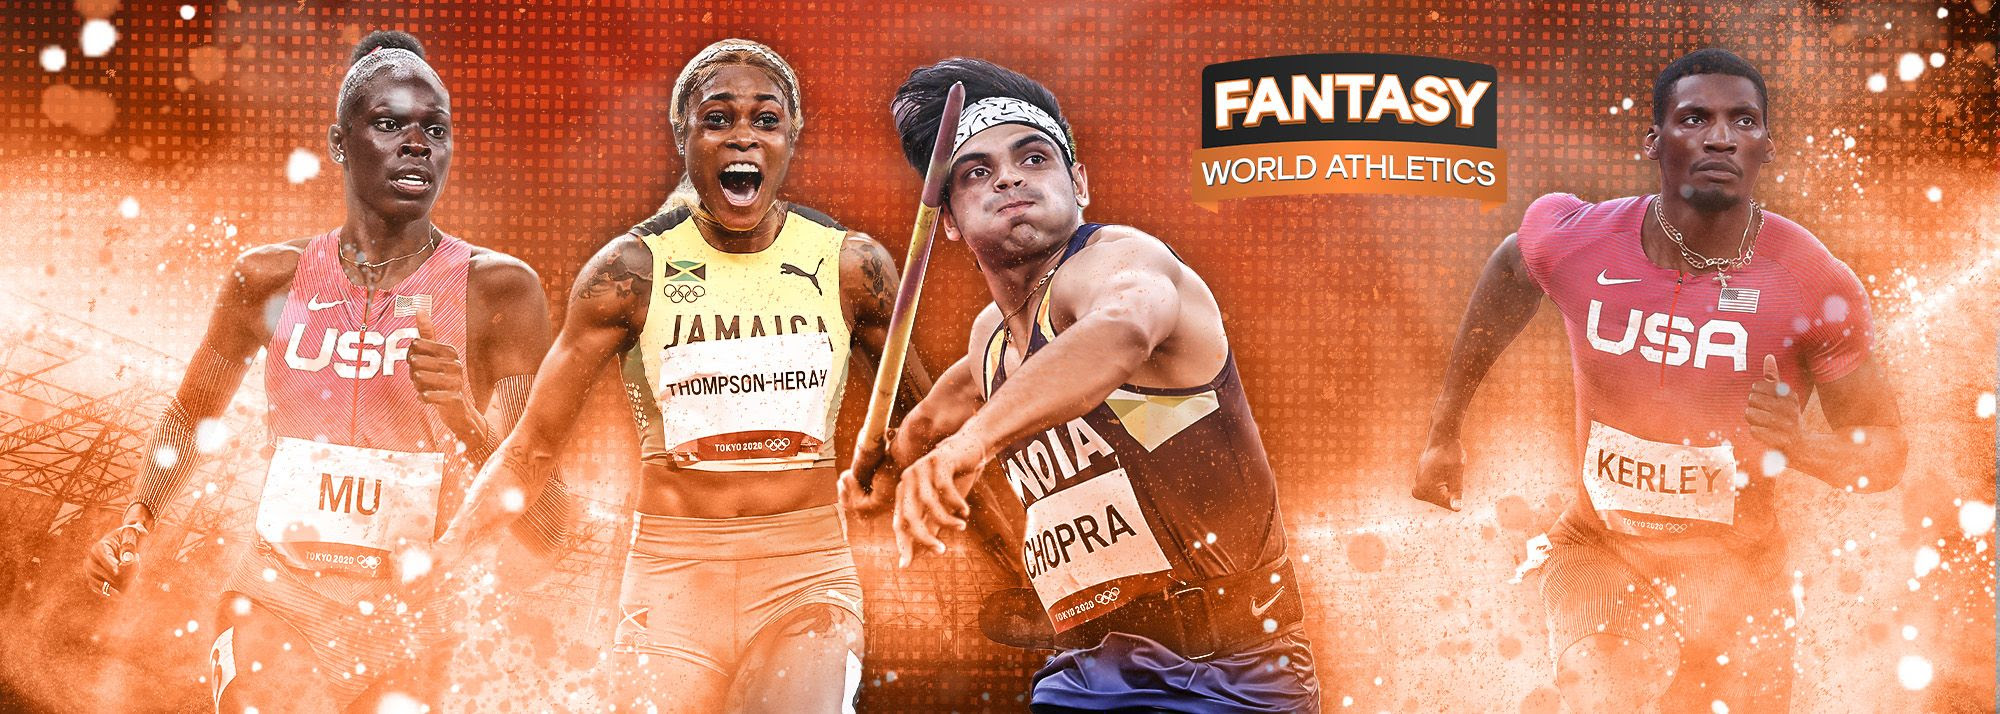 Fantasy world athletics launches